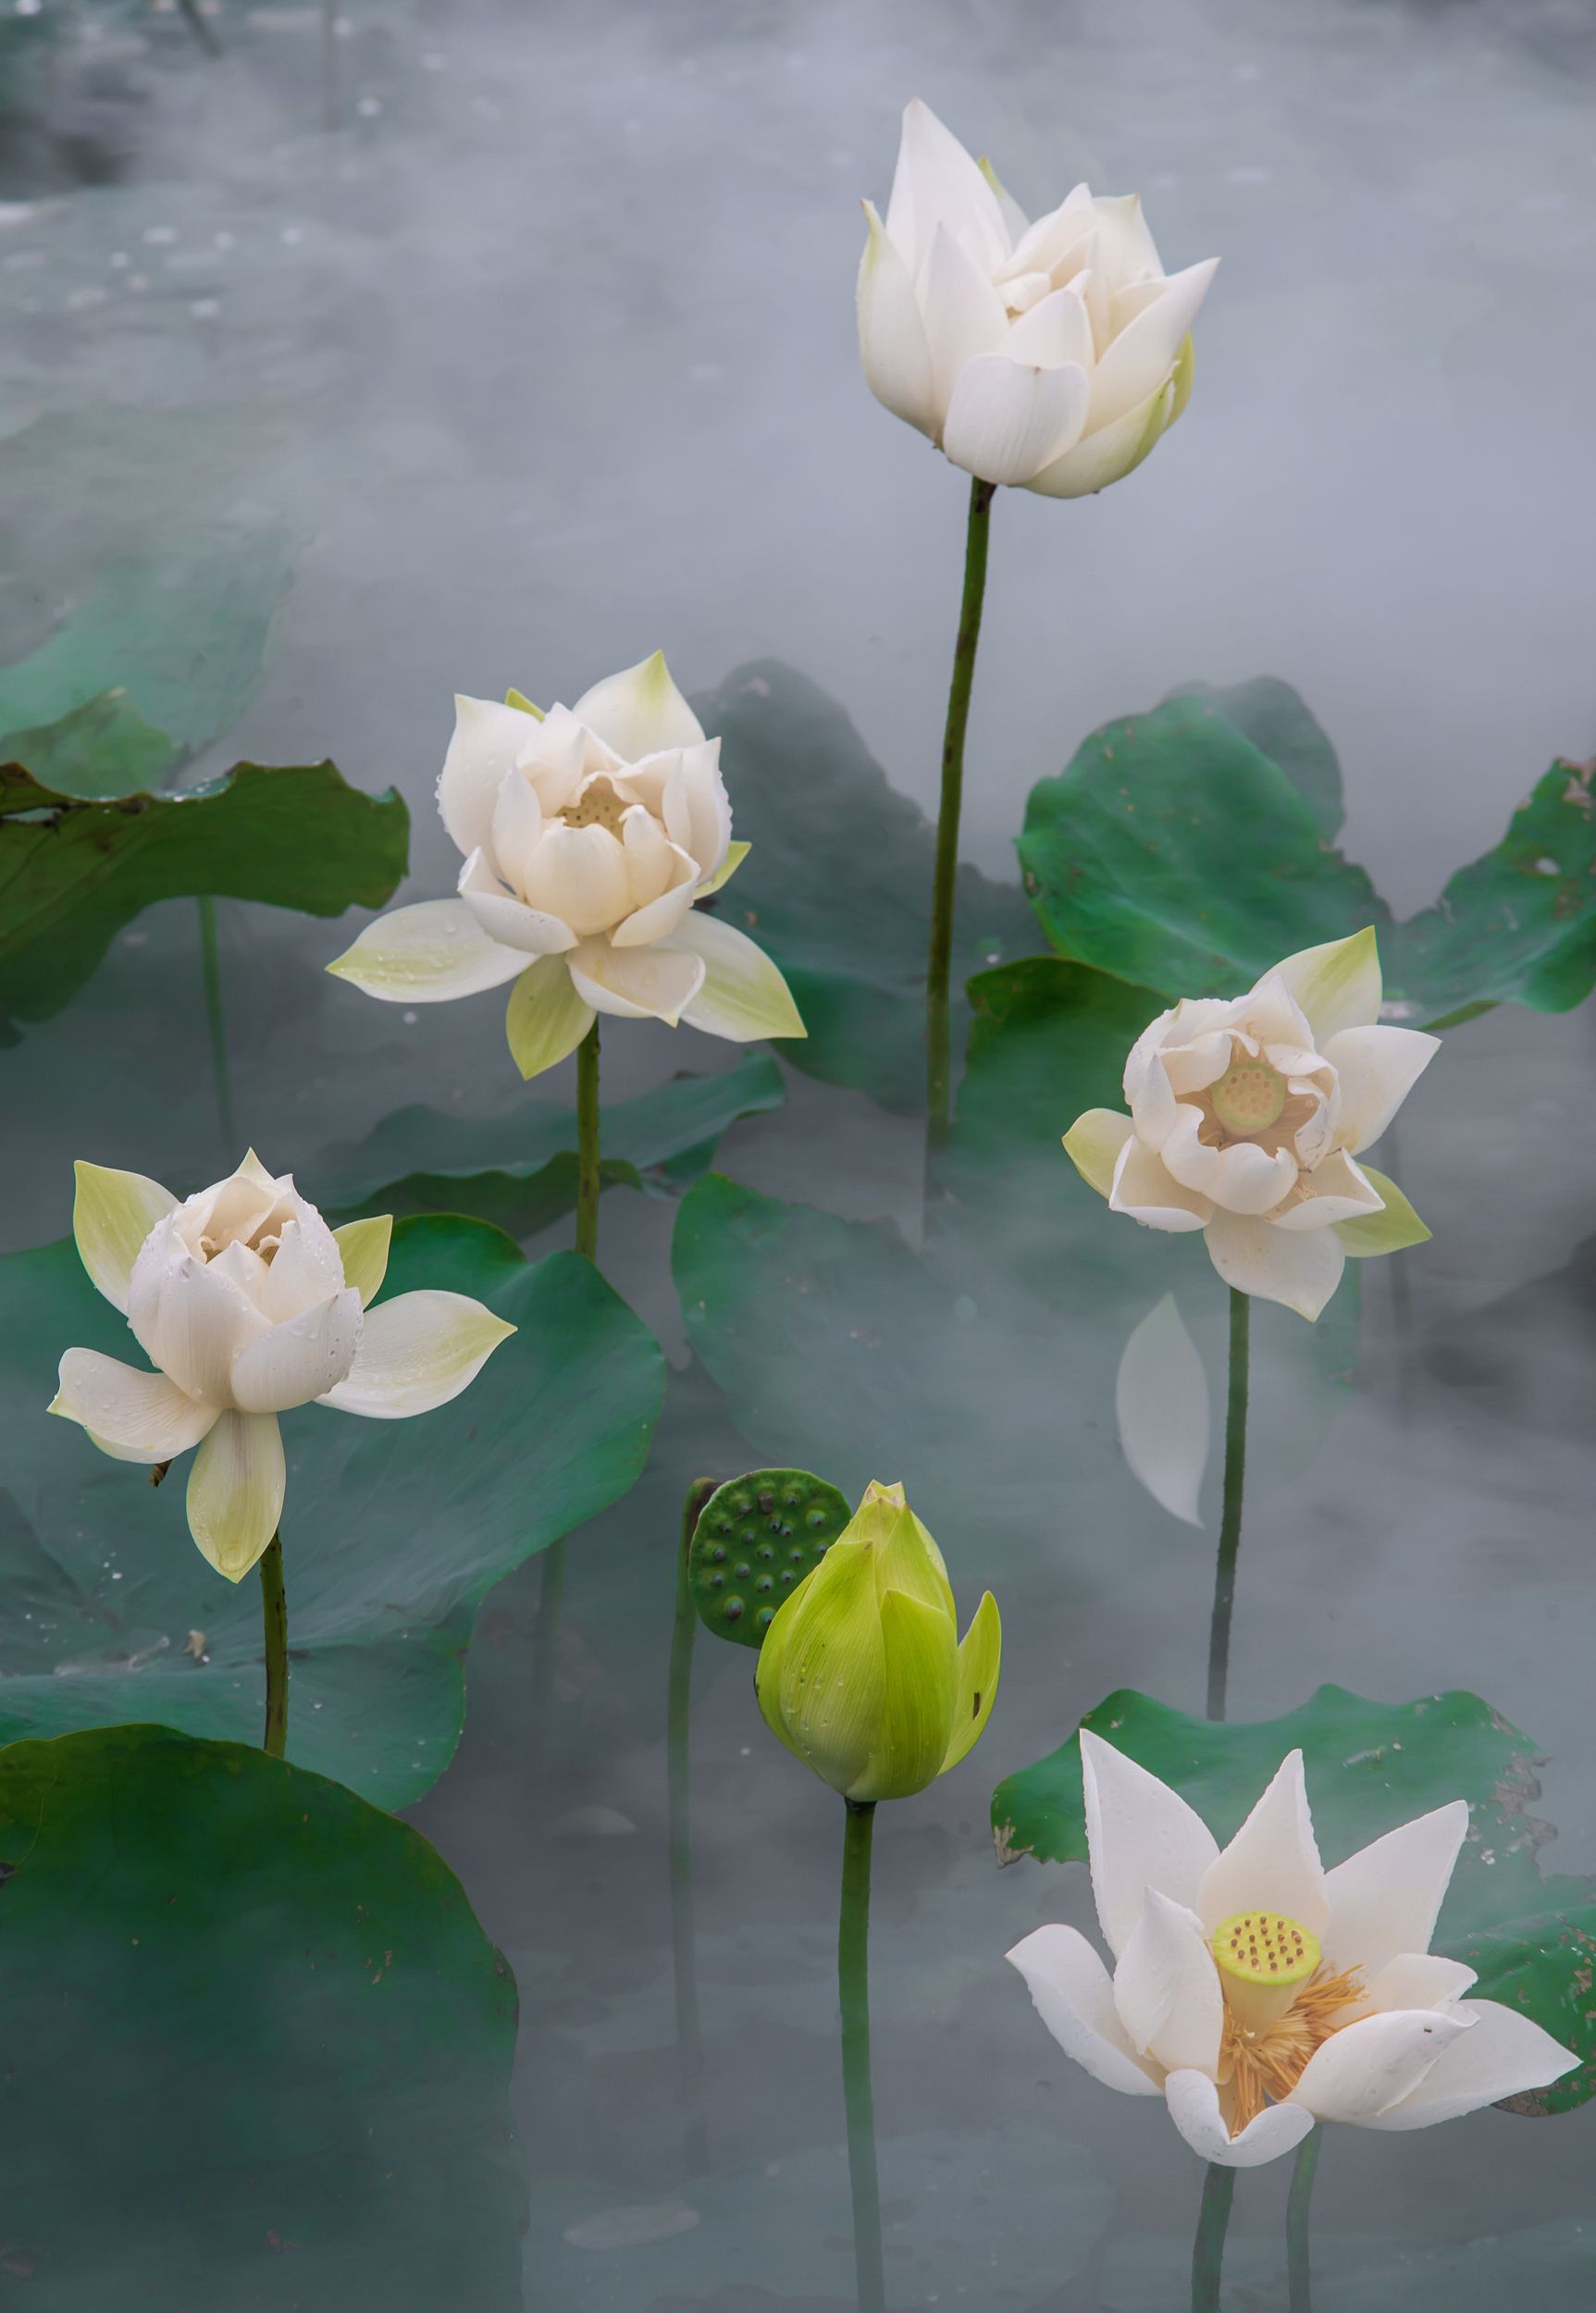 Landscape, Flower, Lotus, Nikon, Vietnam, Anh Tuấn Trần